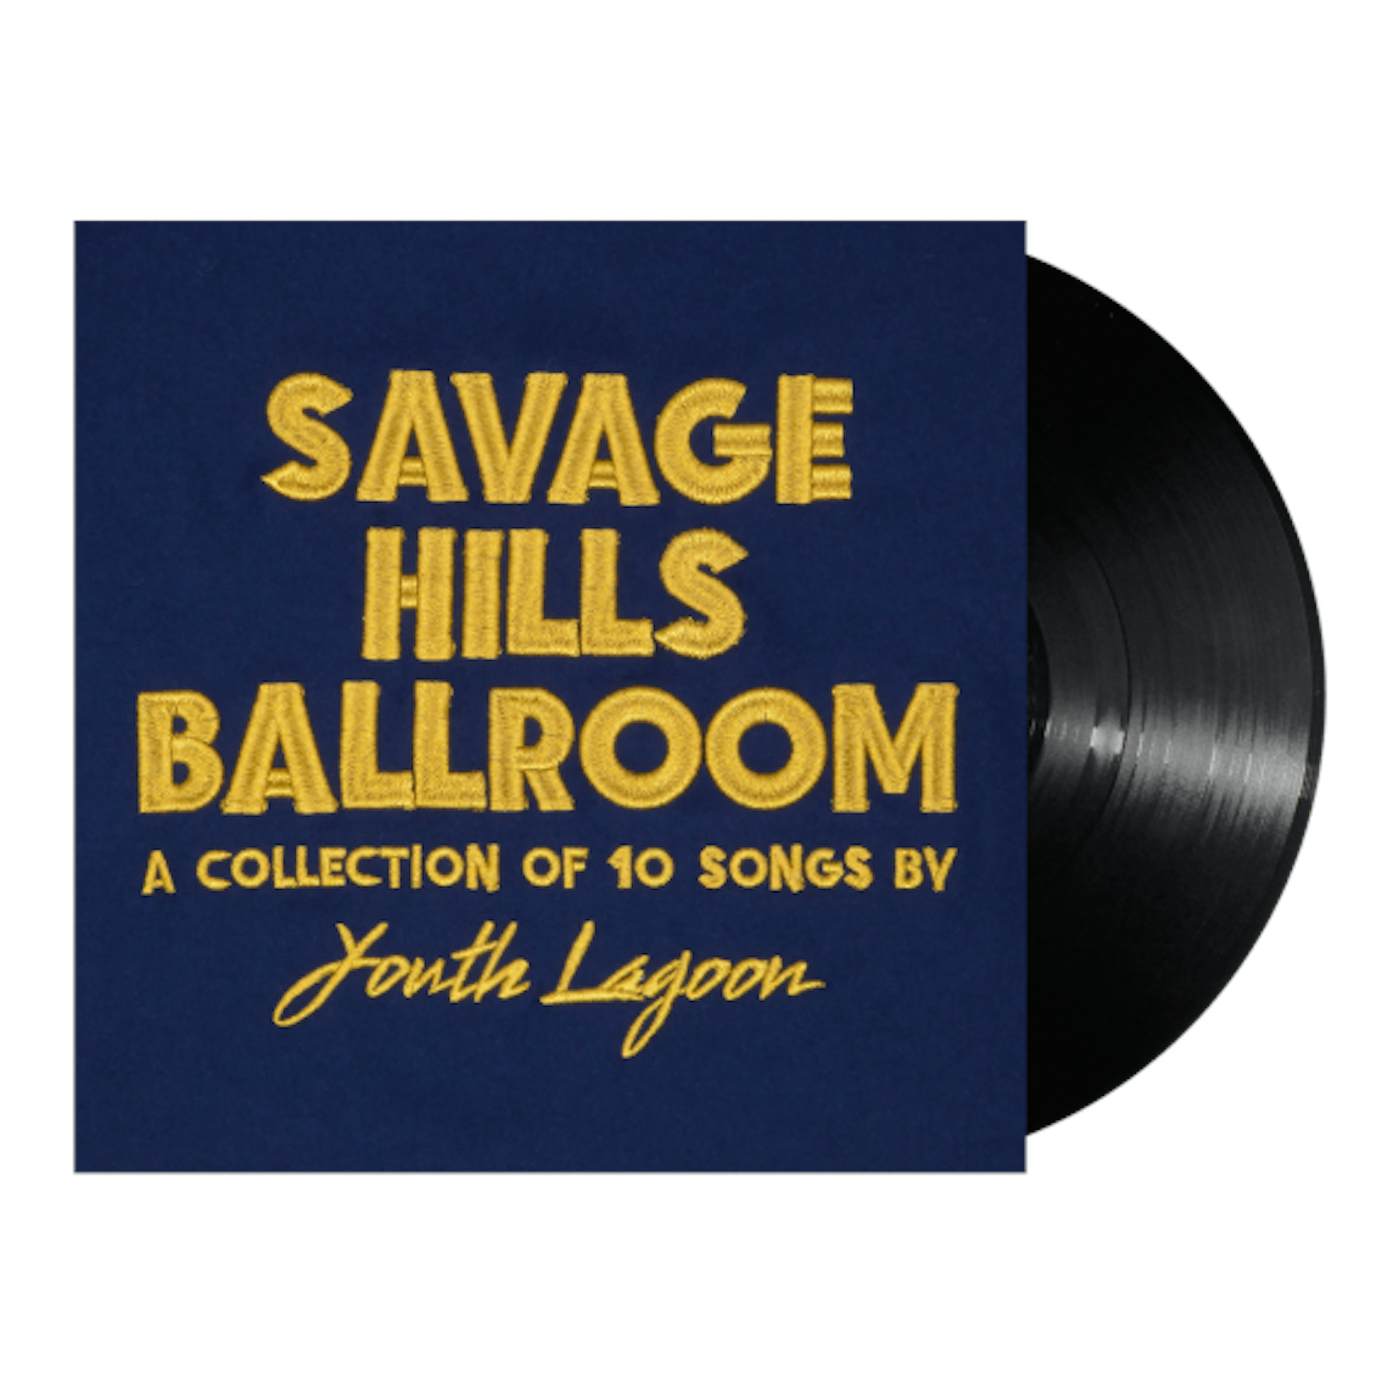 Youth Lagoon Savage Hills Ballroom 12" Vinyl